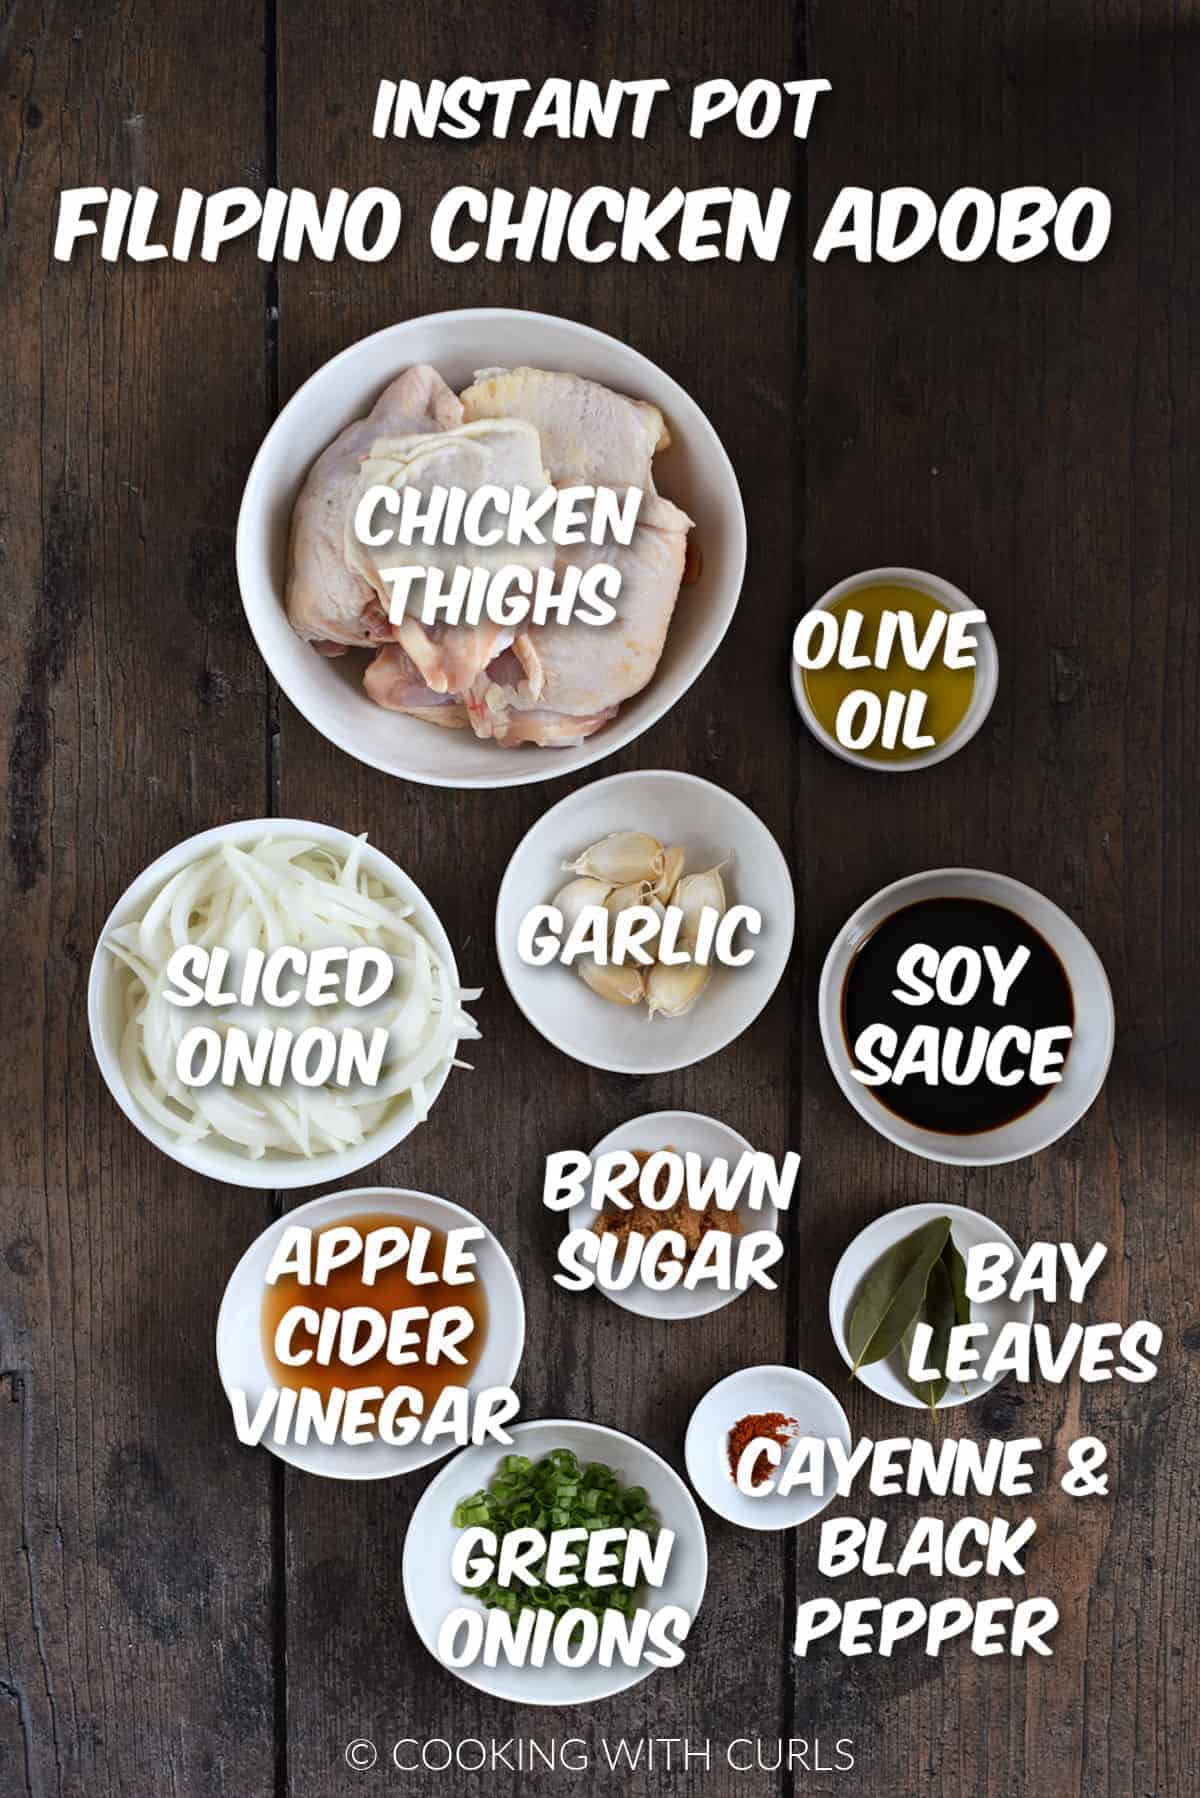 Ingredients to make instant pot filipino chicken adobo in white bowls.